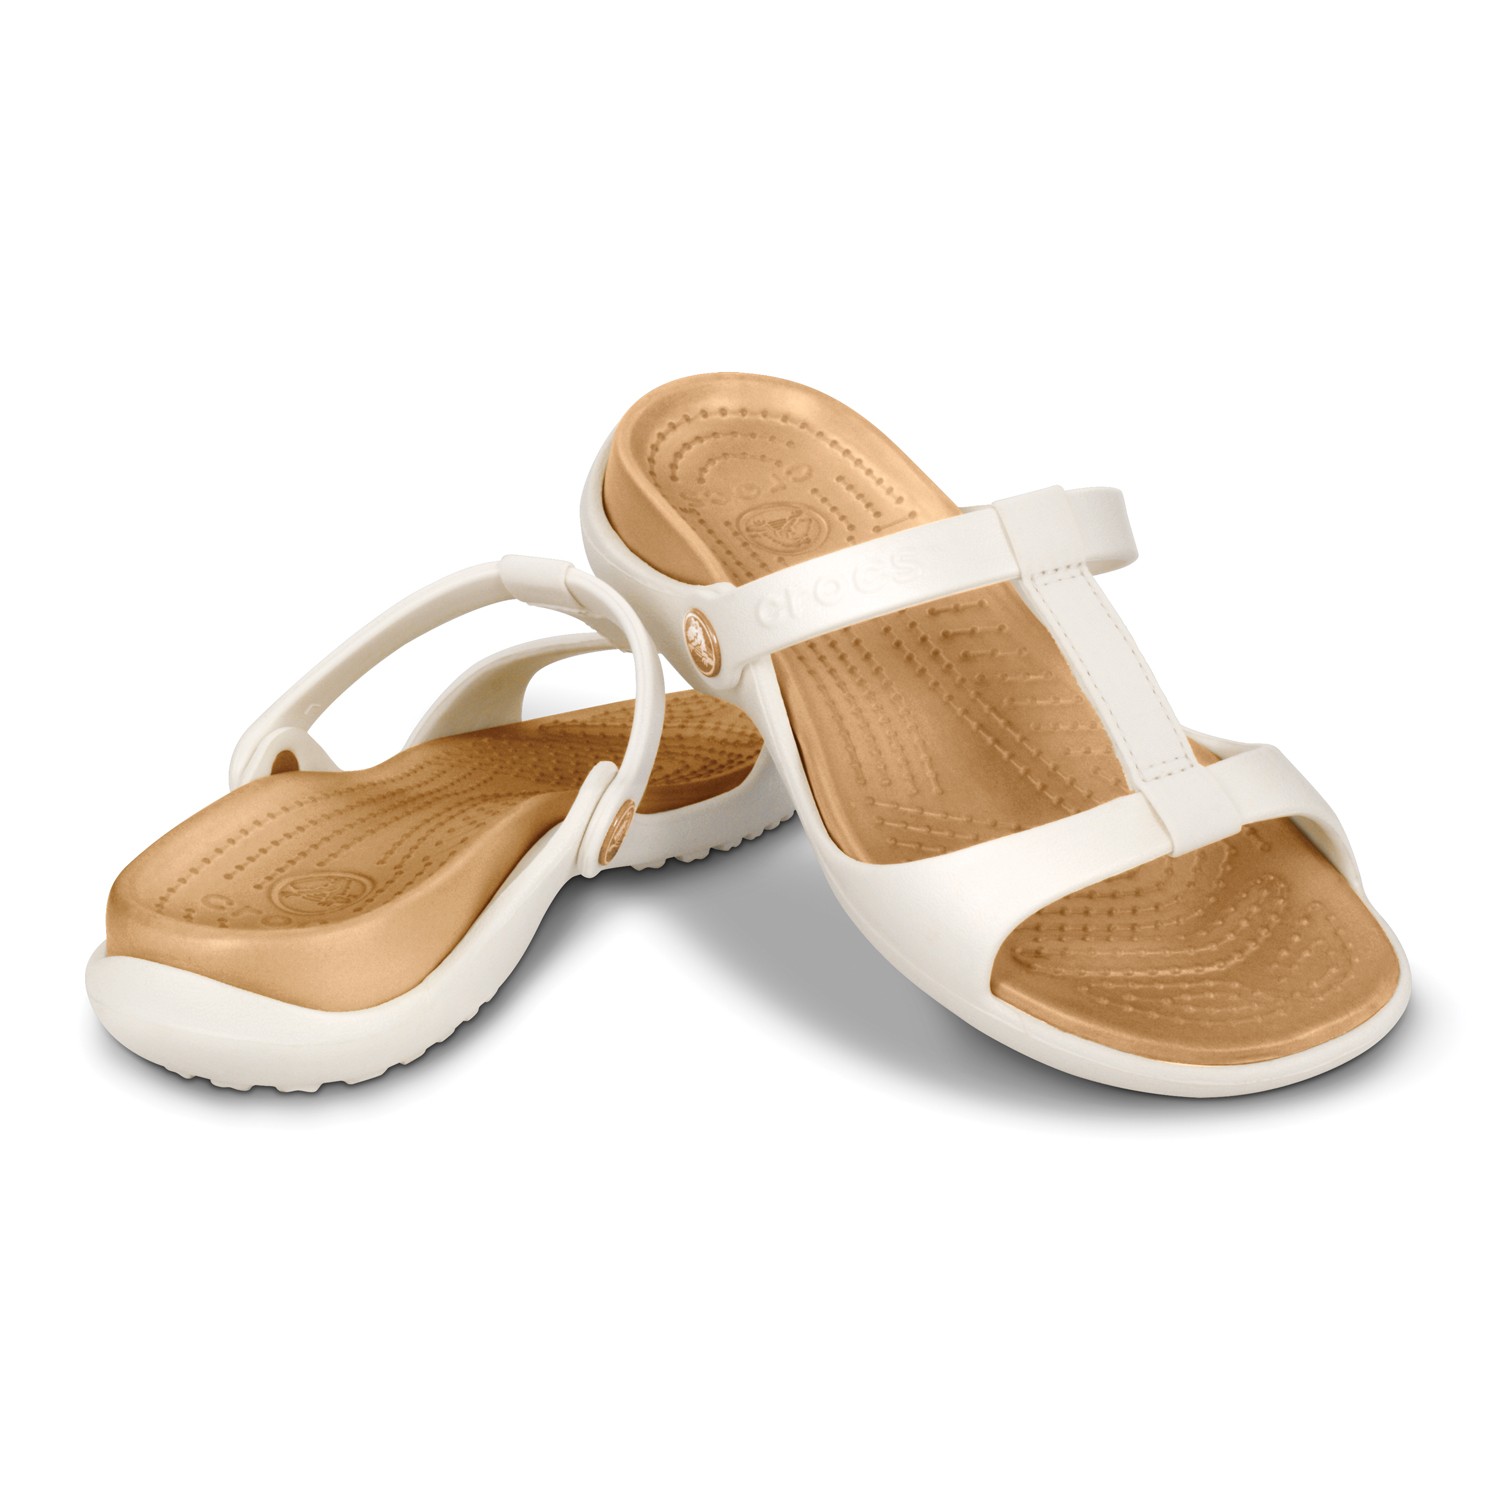 nike toddler sandals size 11